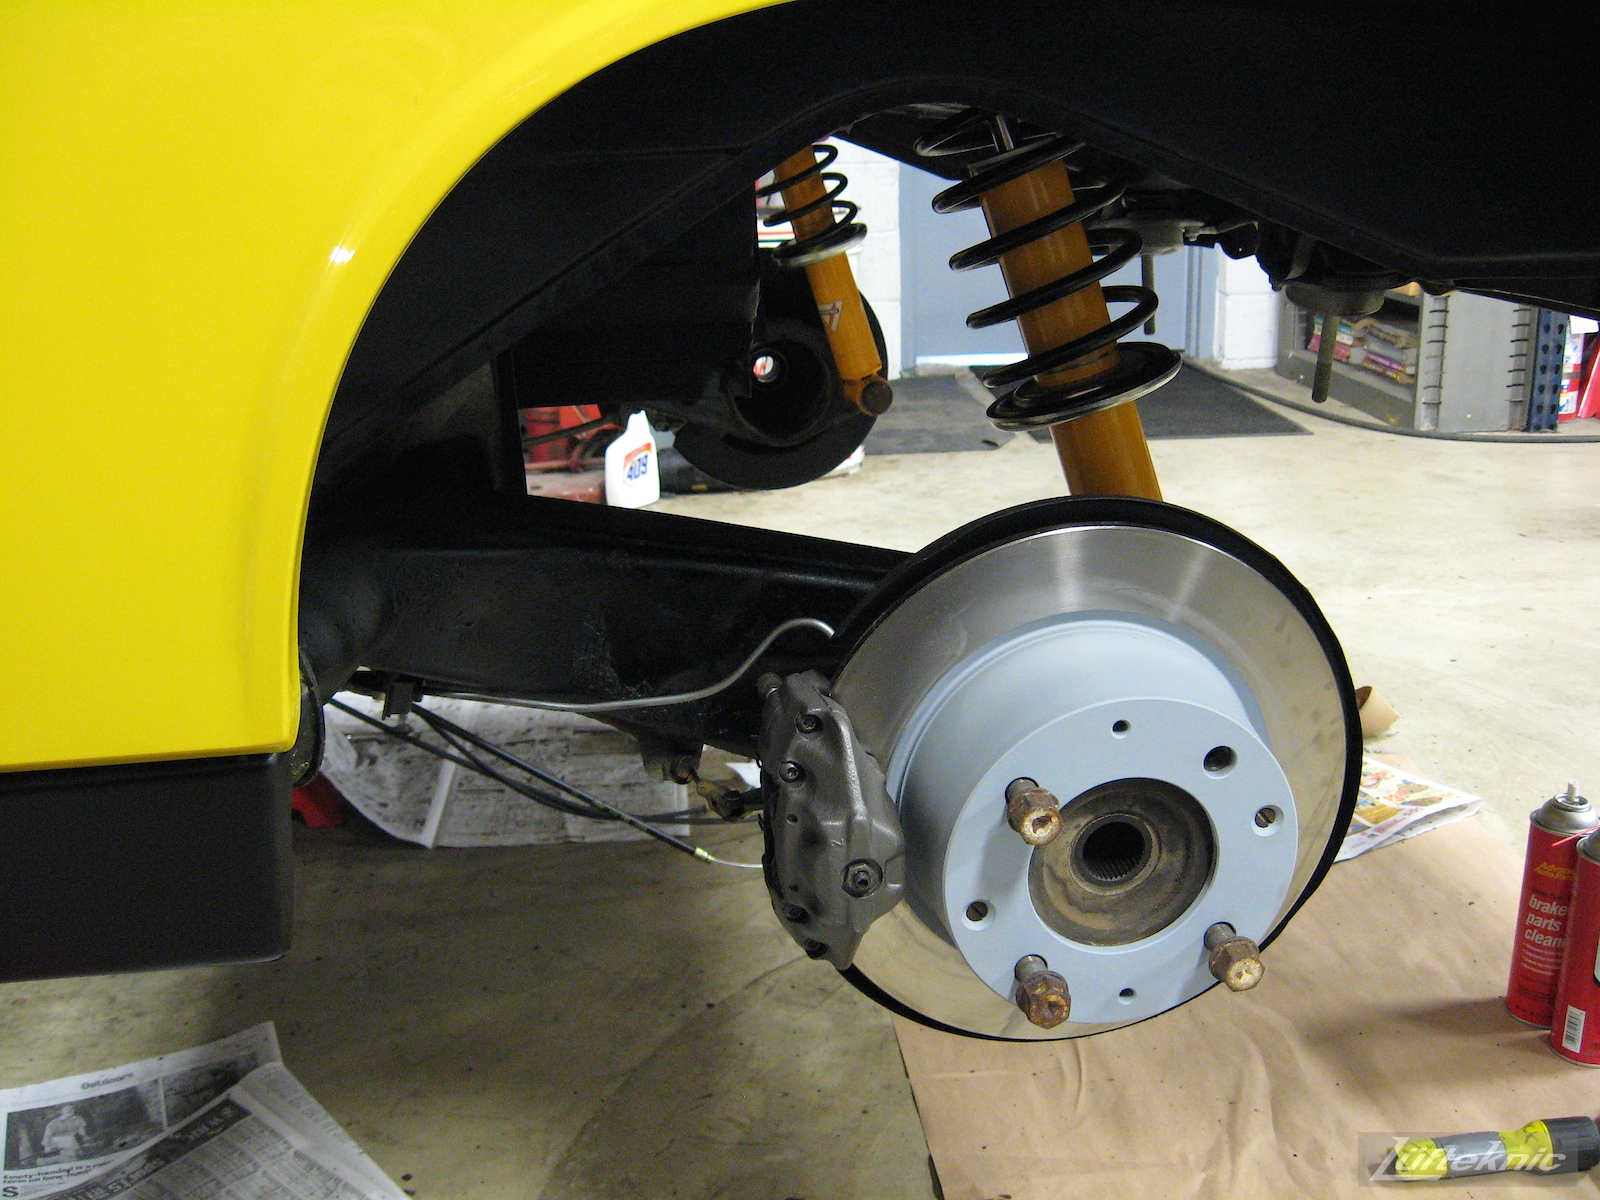 Fresh rear brakes for a restored yellow Porsche 914 at Lufteknic.